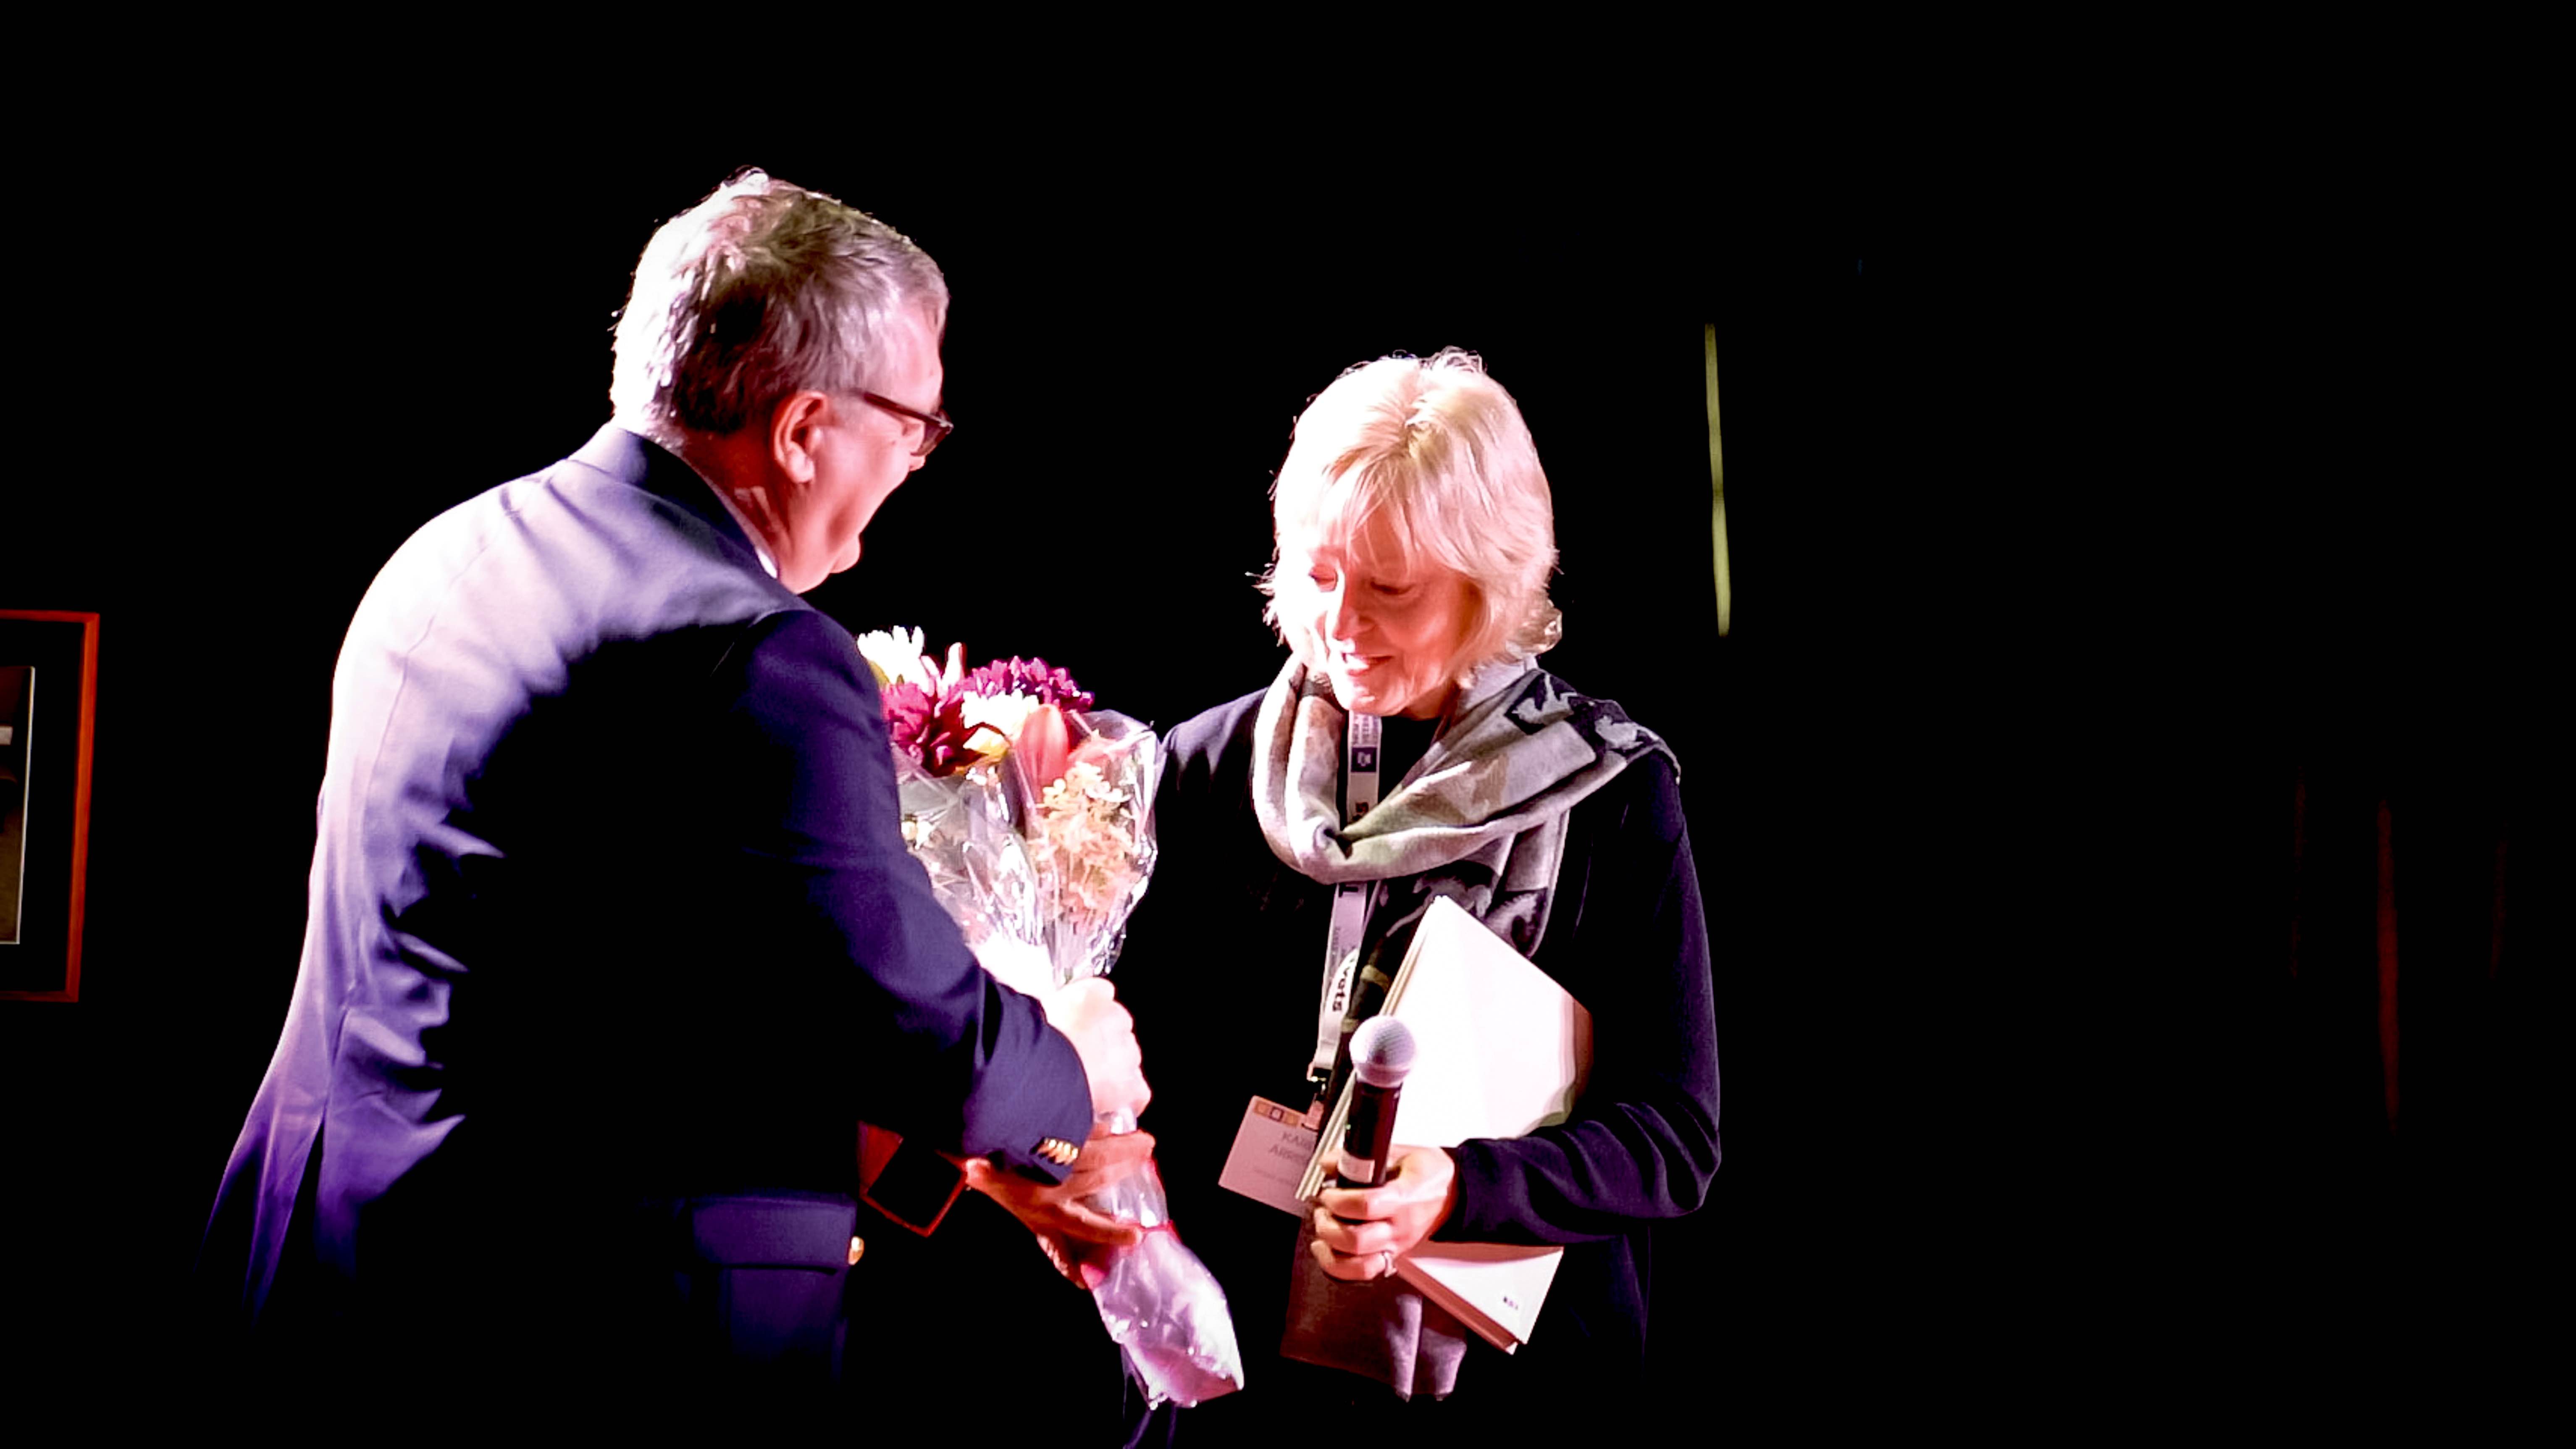 Dean Lorin Warnick presents Karen Arrison with flowers